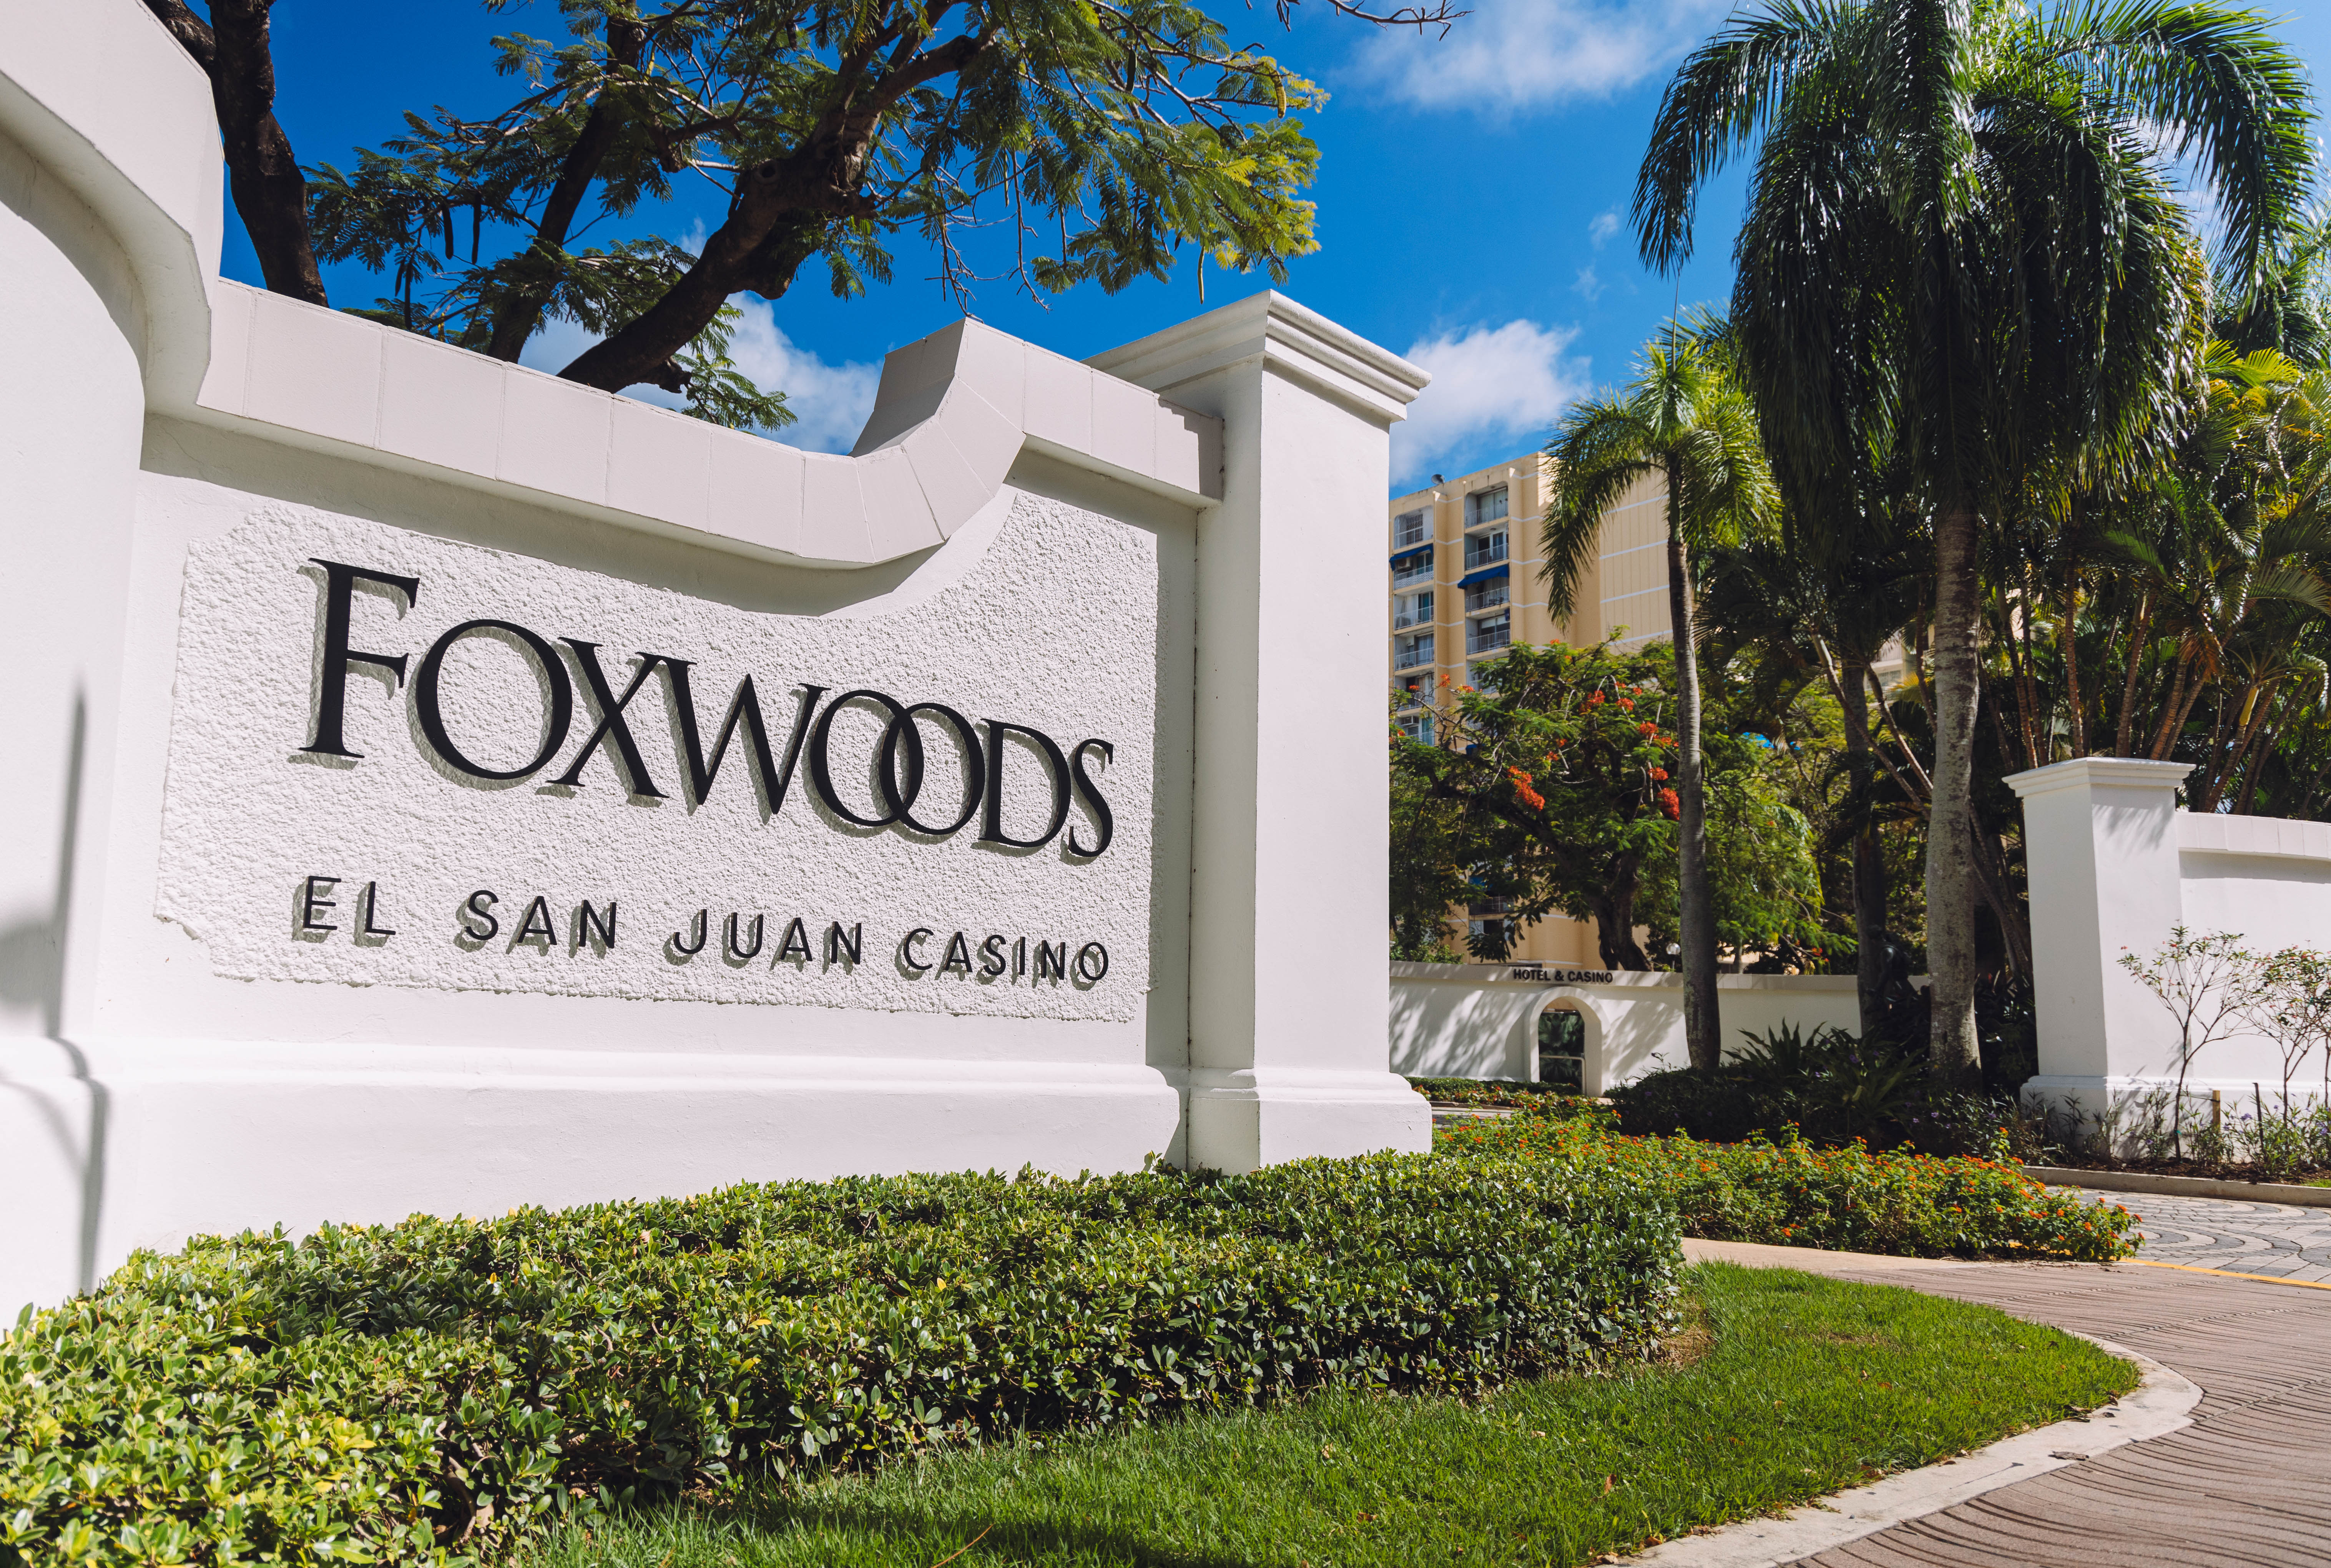 Foxwoods El San Juan Casino